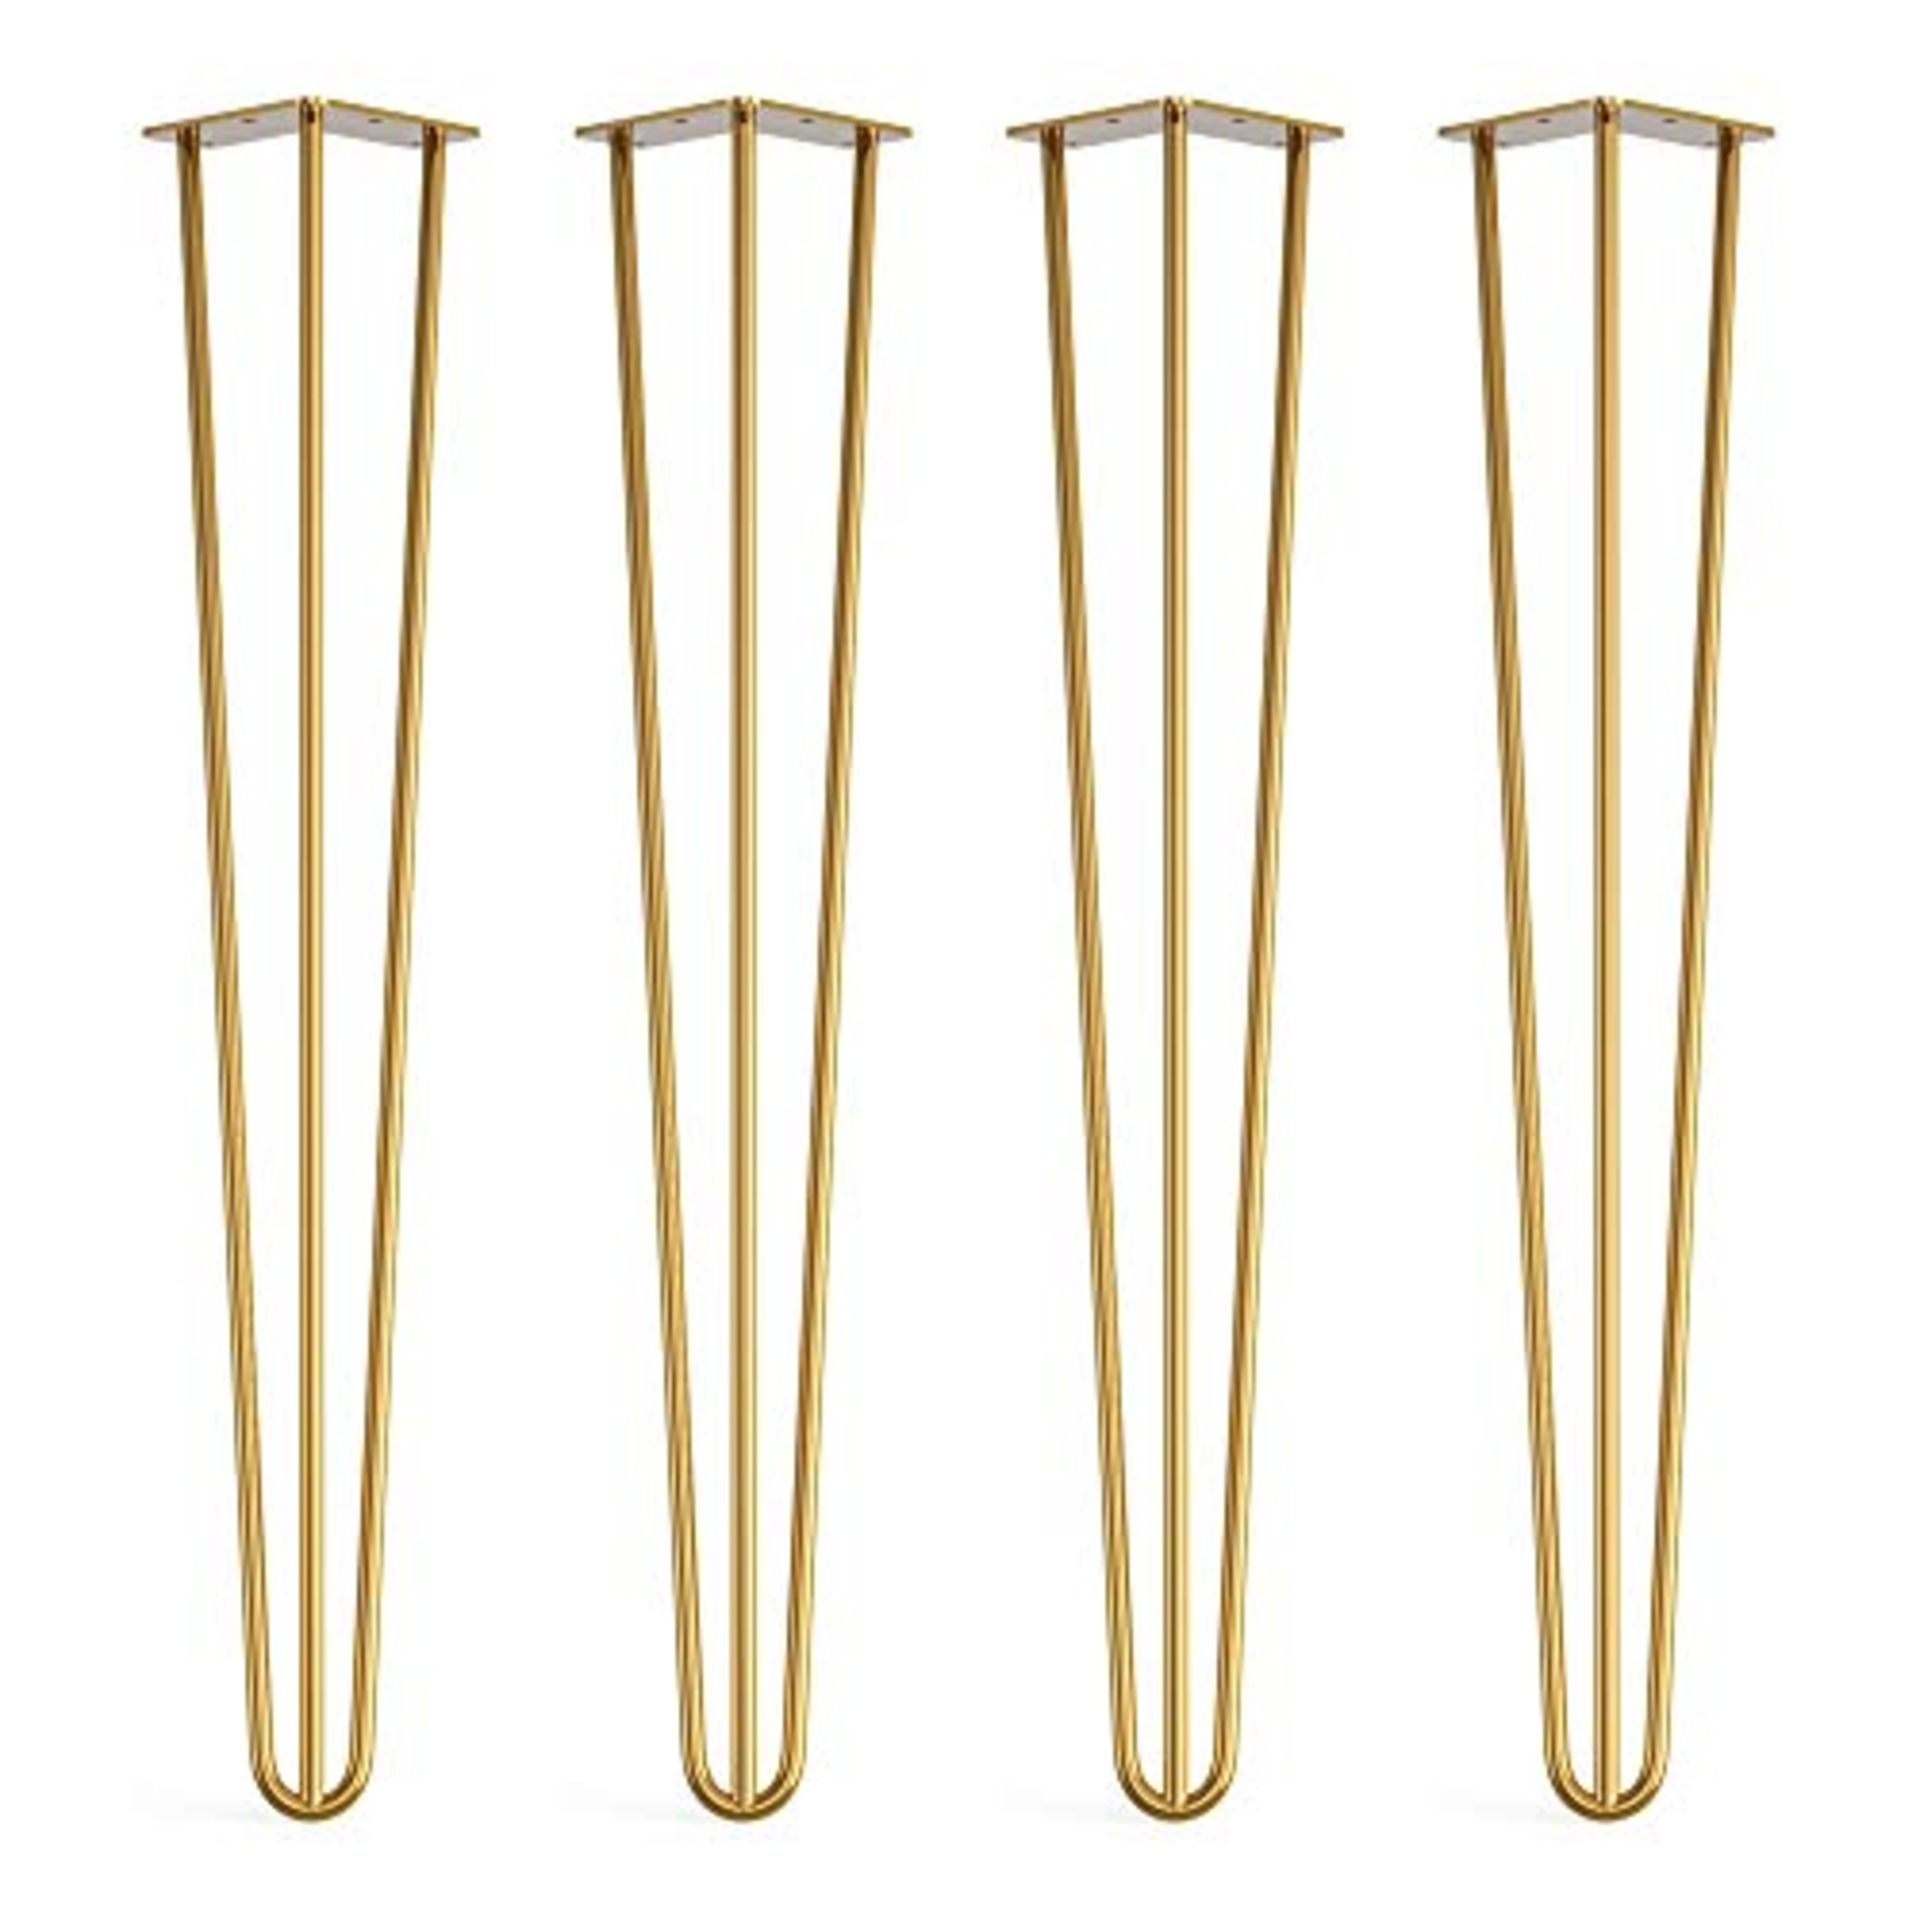 4 x Hairpin Legs with Floor Protector Feet & Screws - 71cm 3 Rod / 10mm, Gold Brass